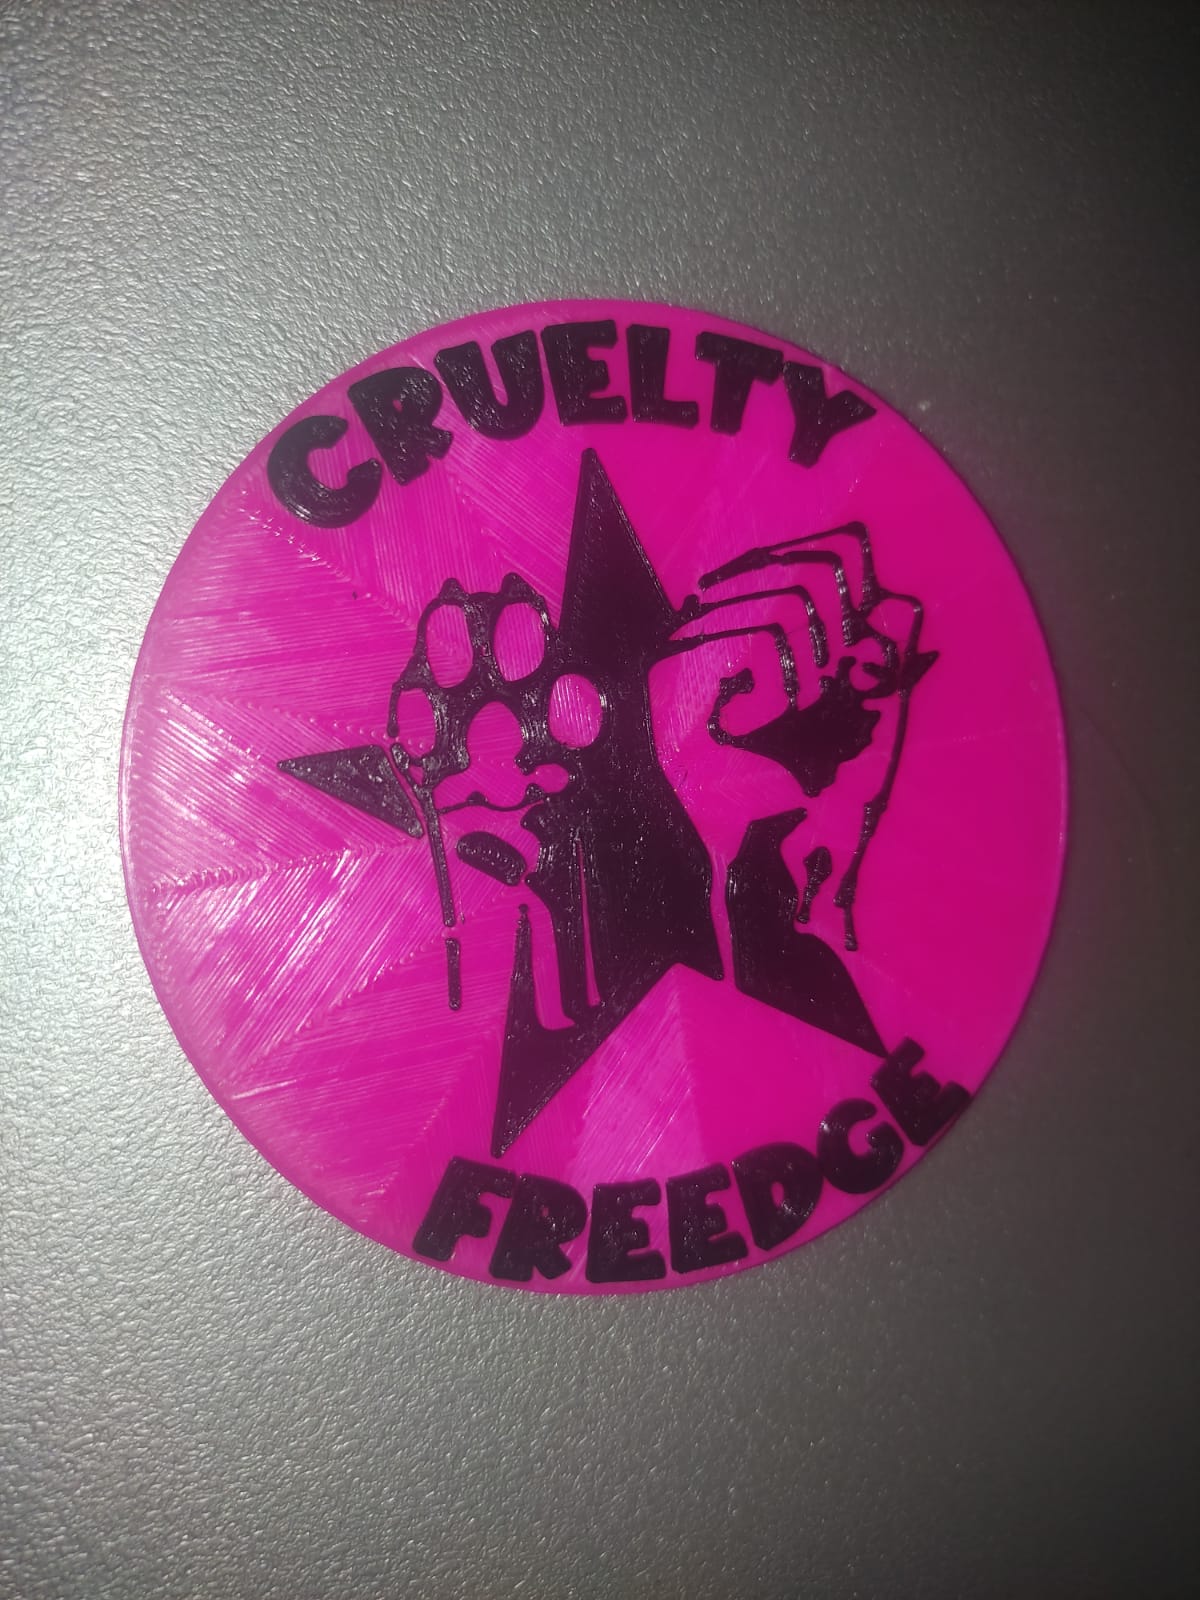 Cruelty Free fridge magnet